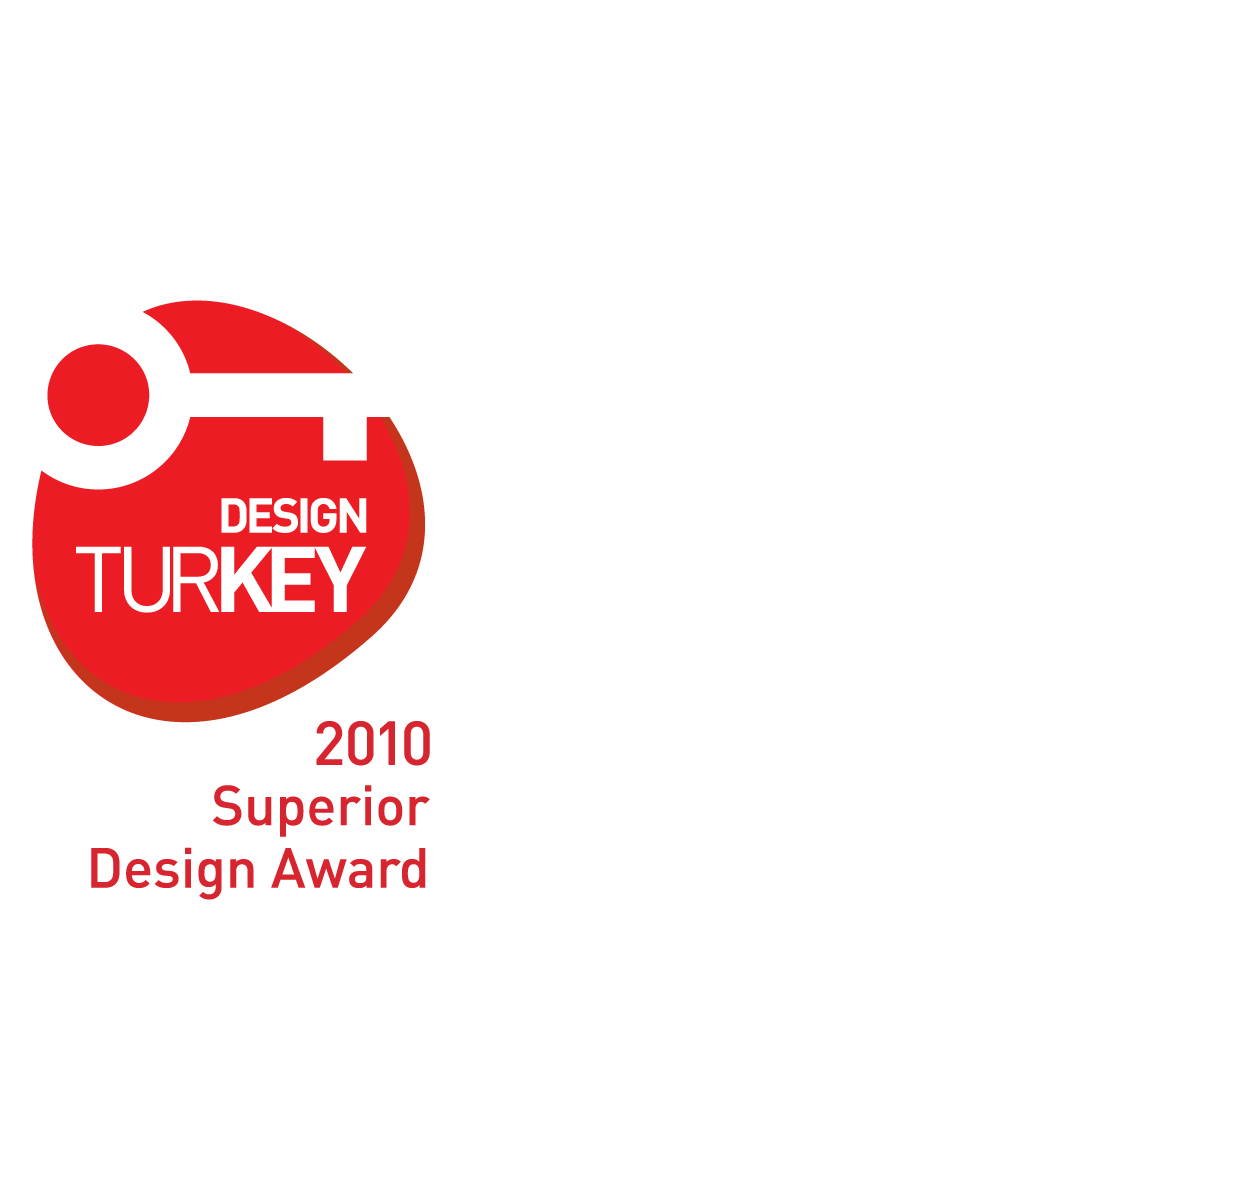 Design Turkey 2010 Superior Design Award